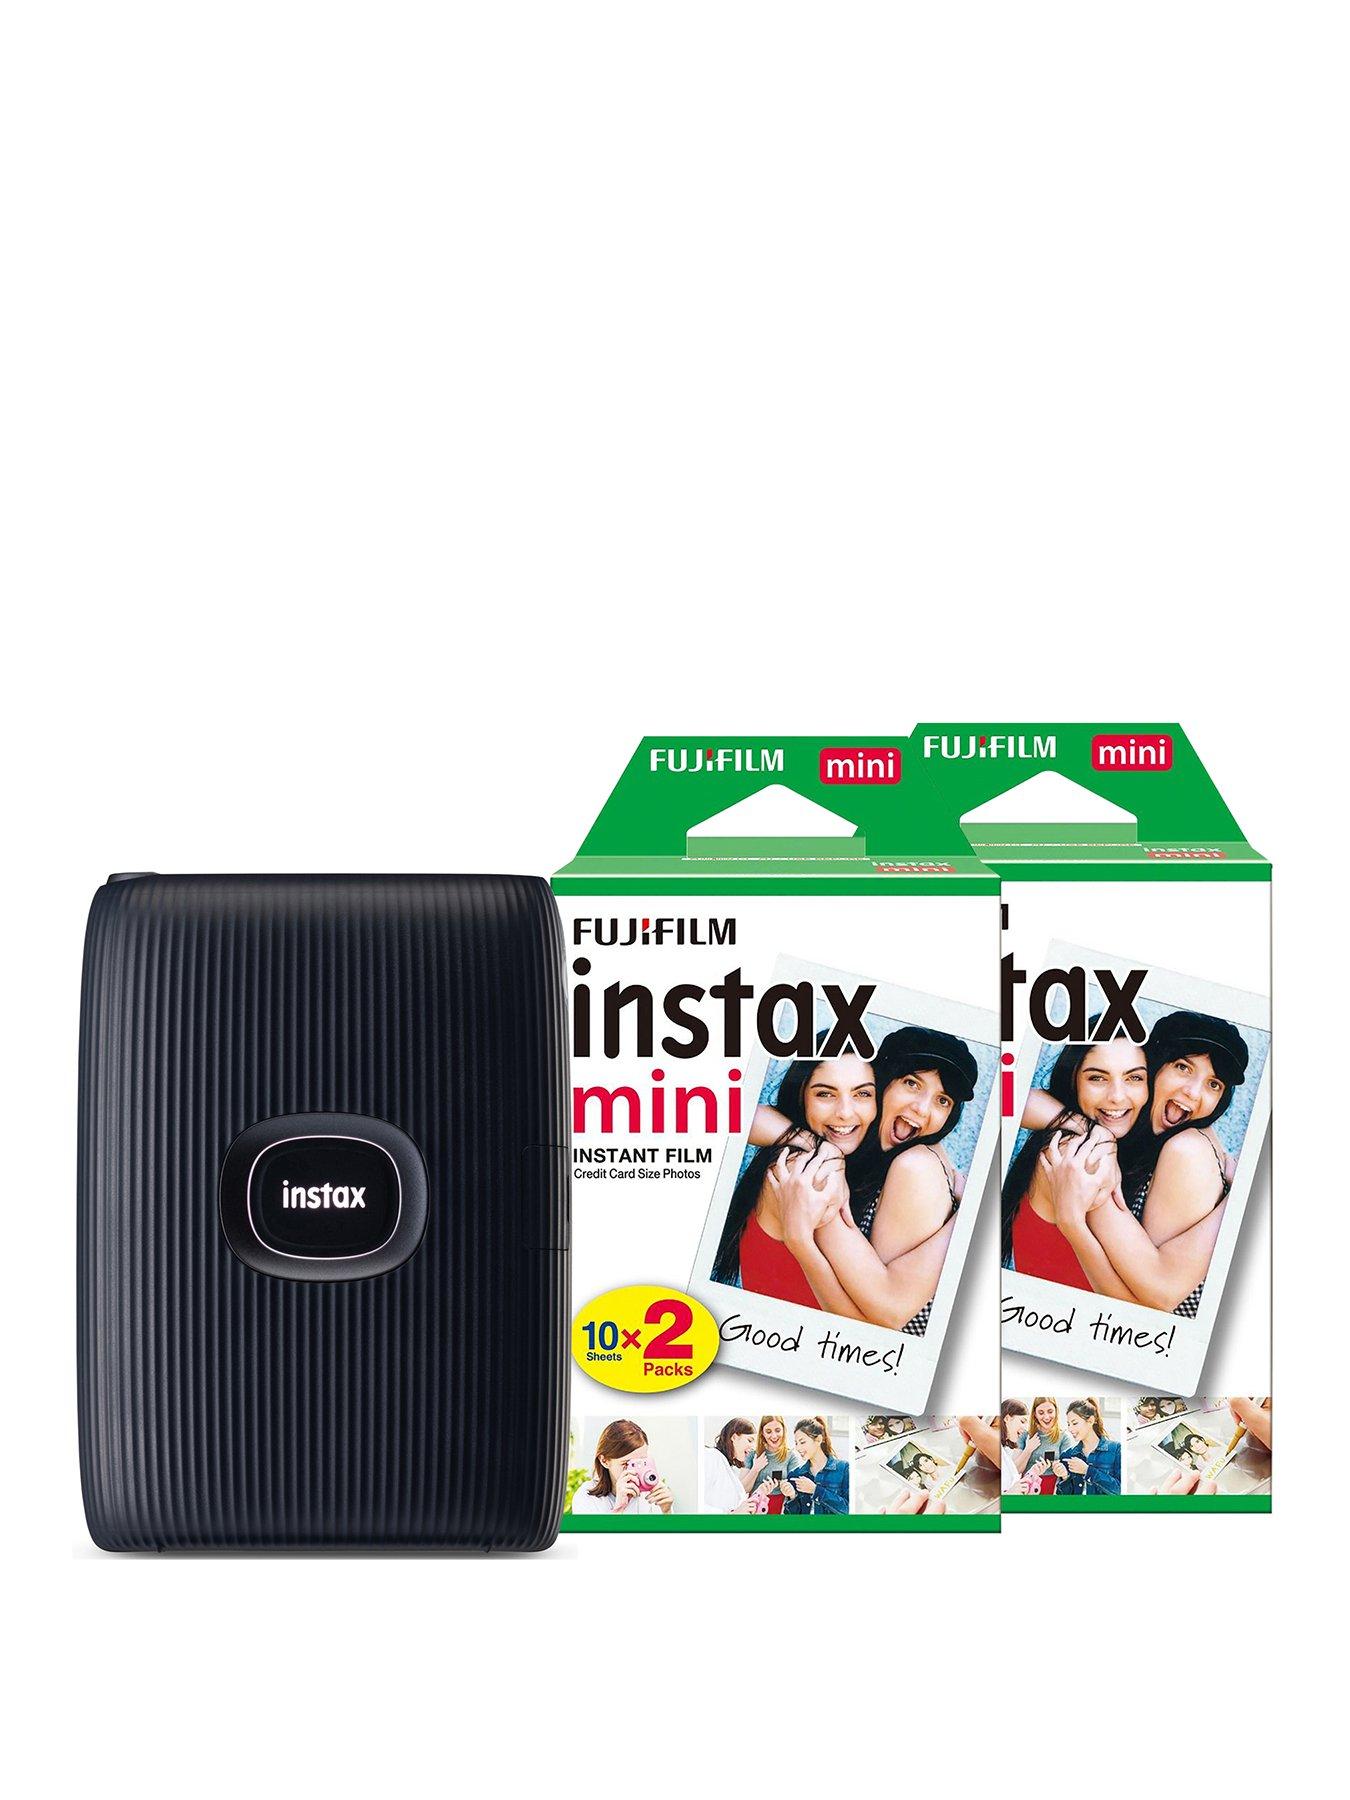 Fujifilm INSTAX mini Link review: INSTANT portable photo printer 